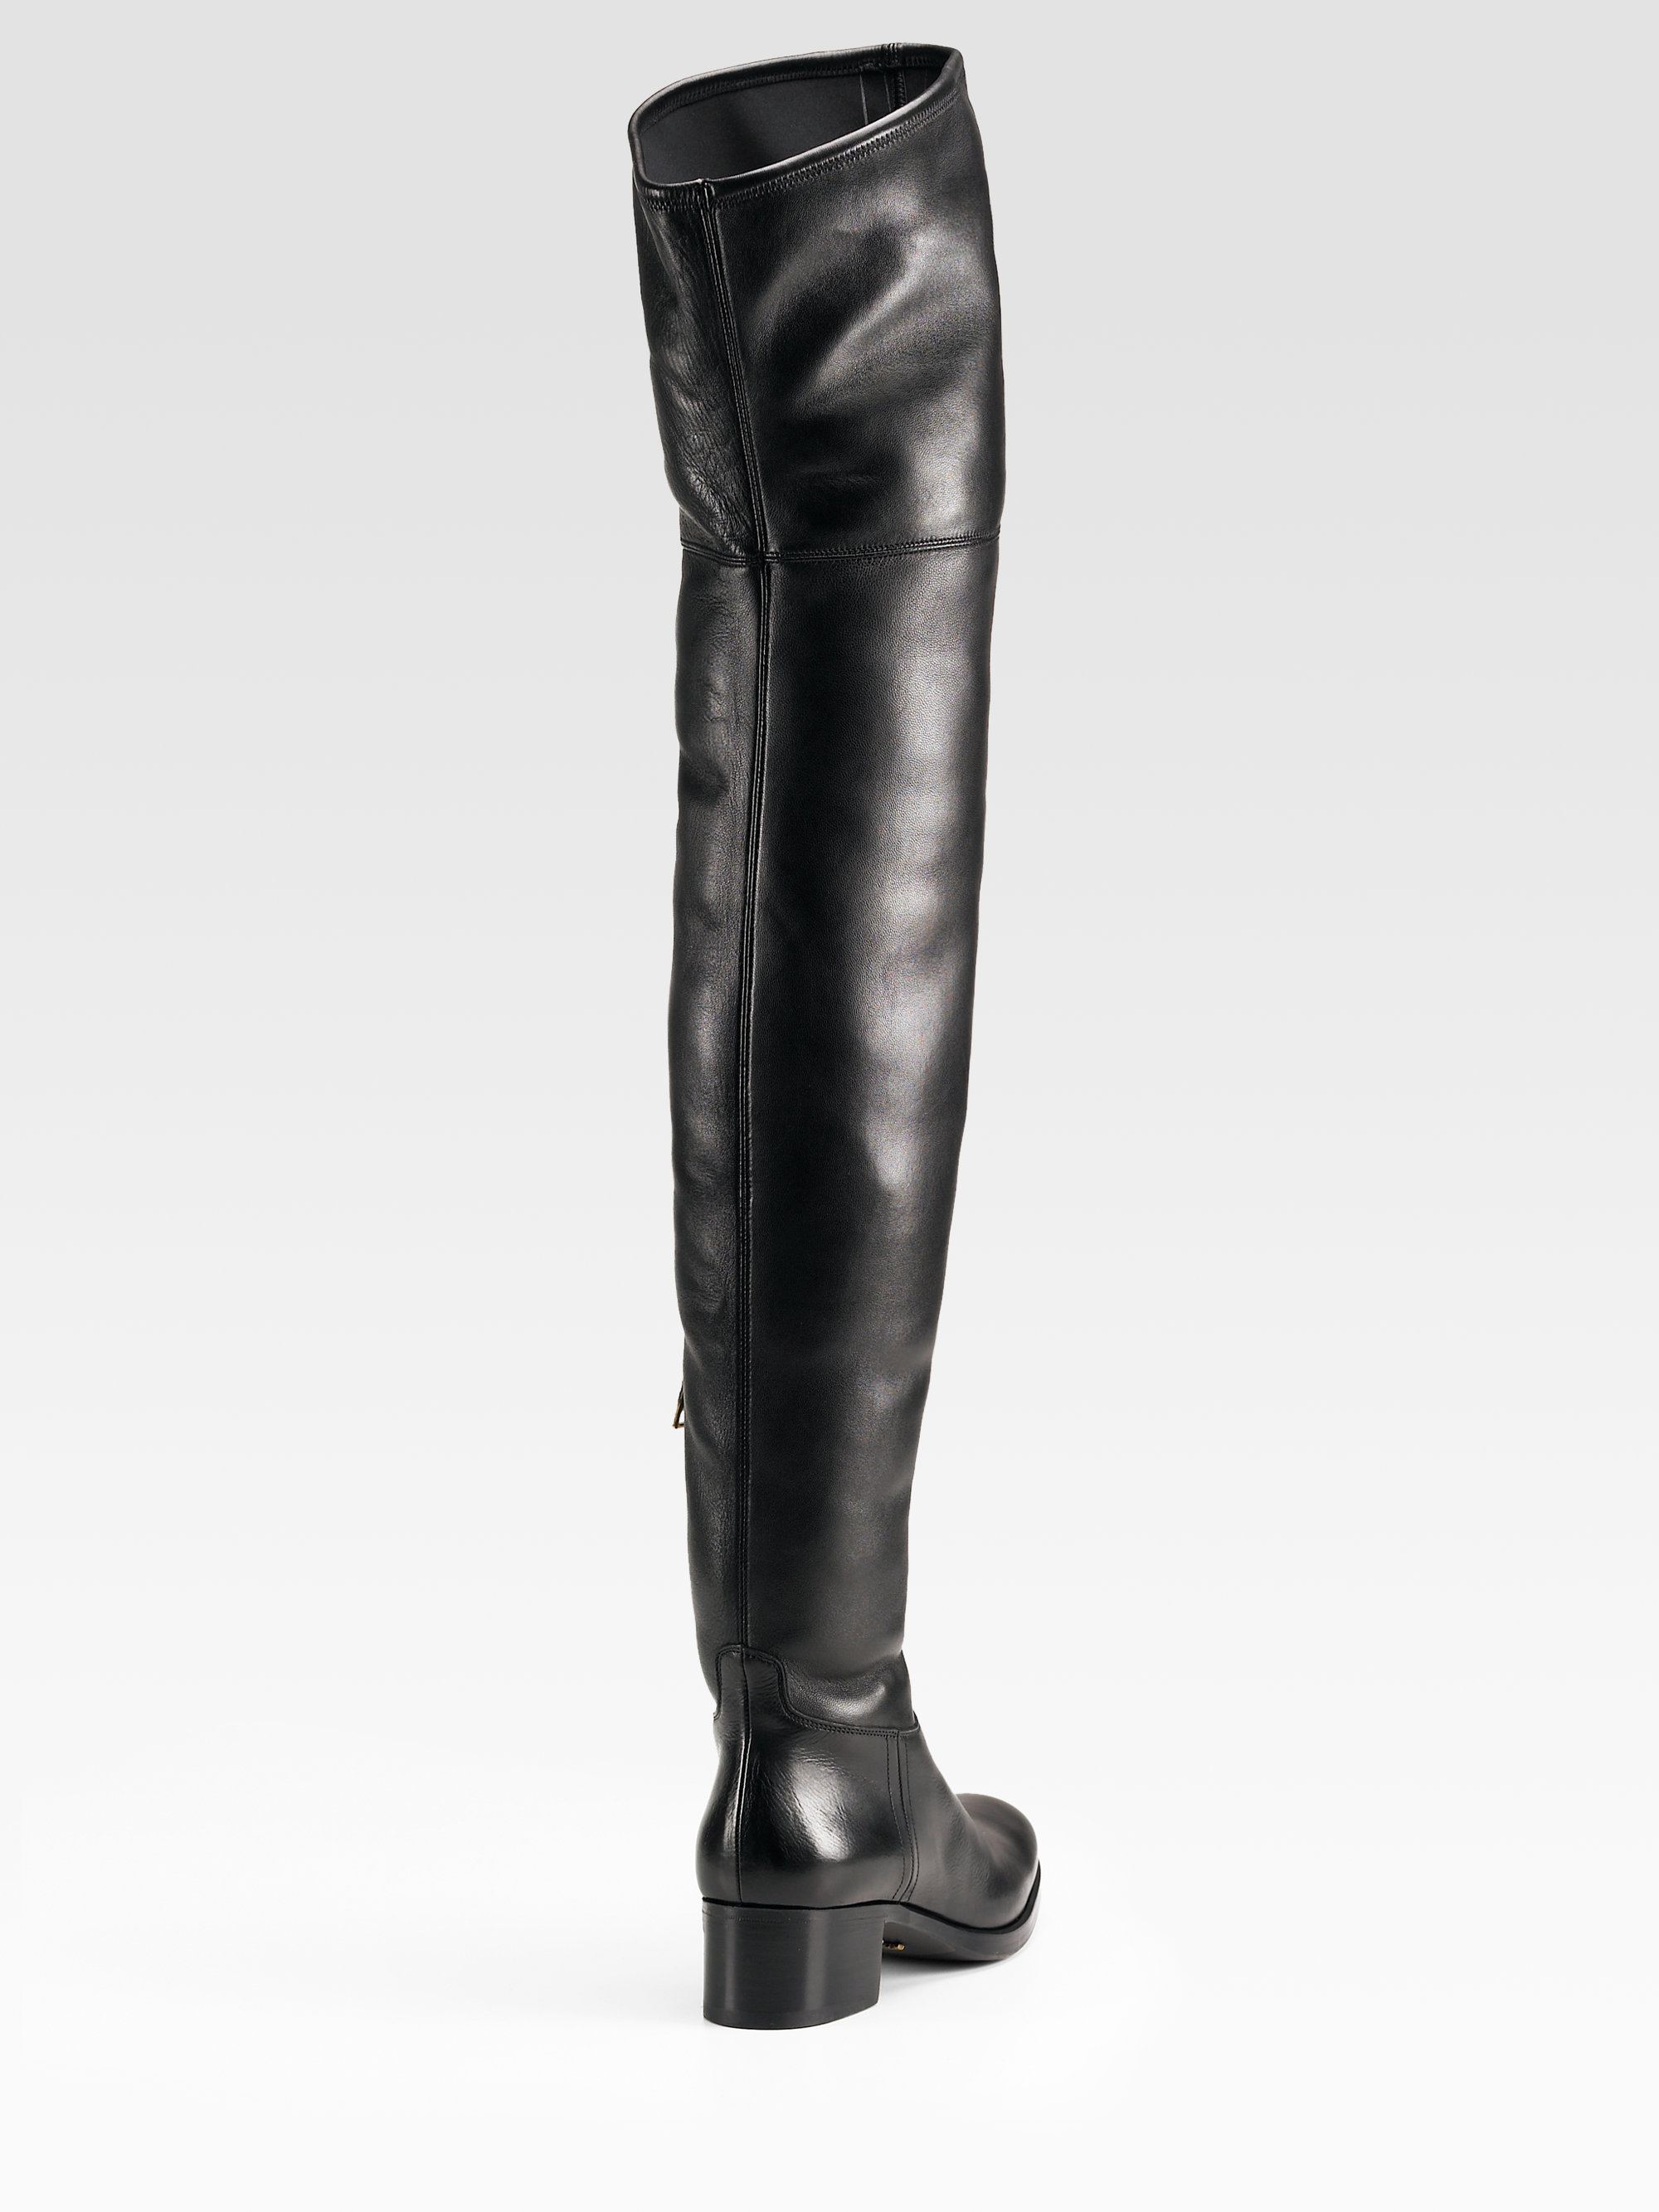 Prada Thigh High Boots in Black - Lyst